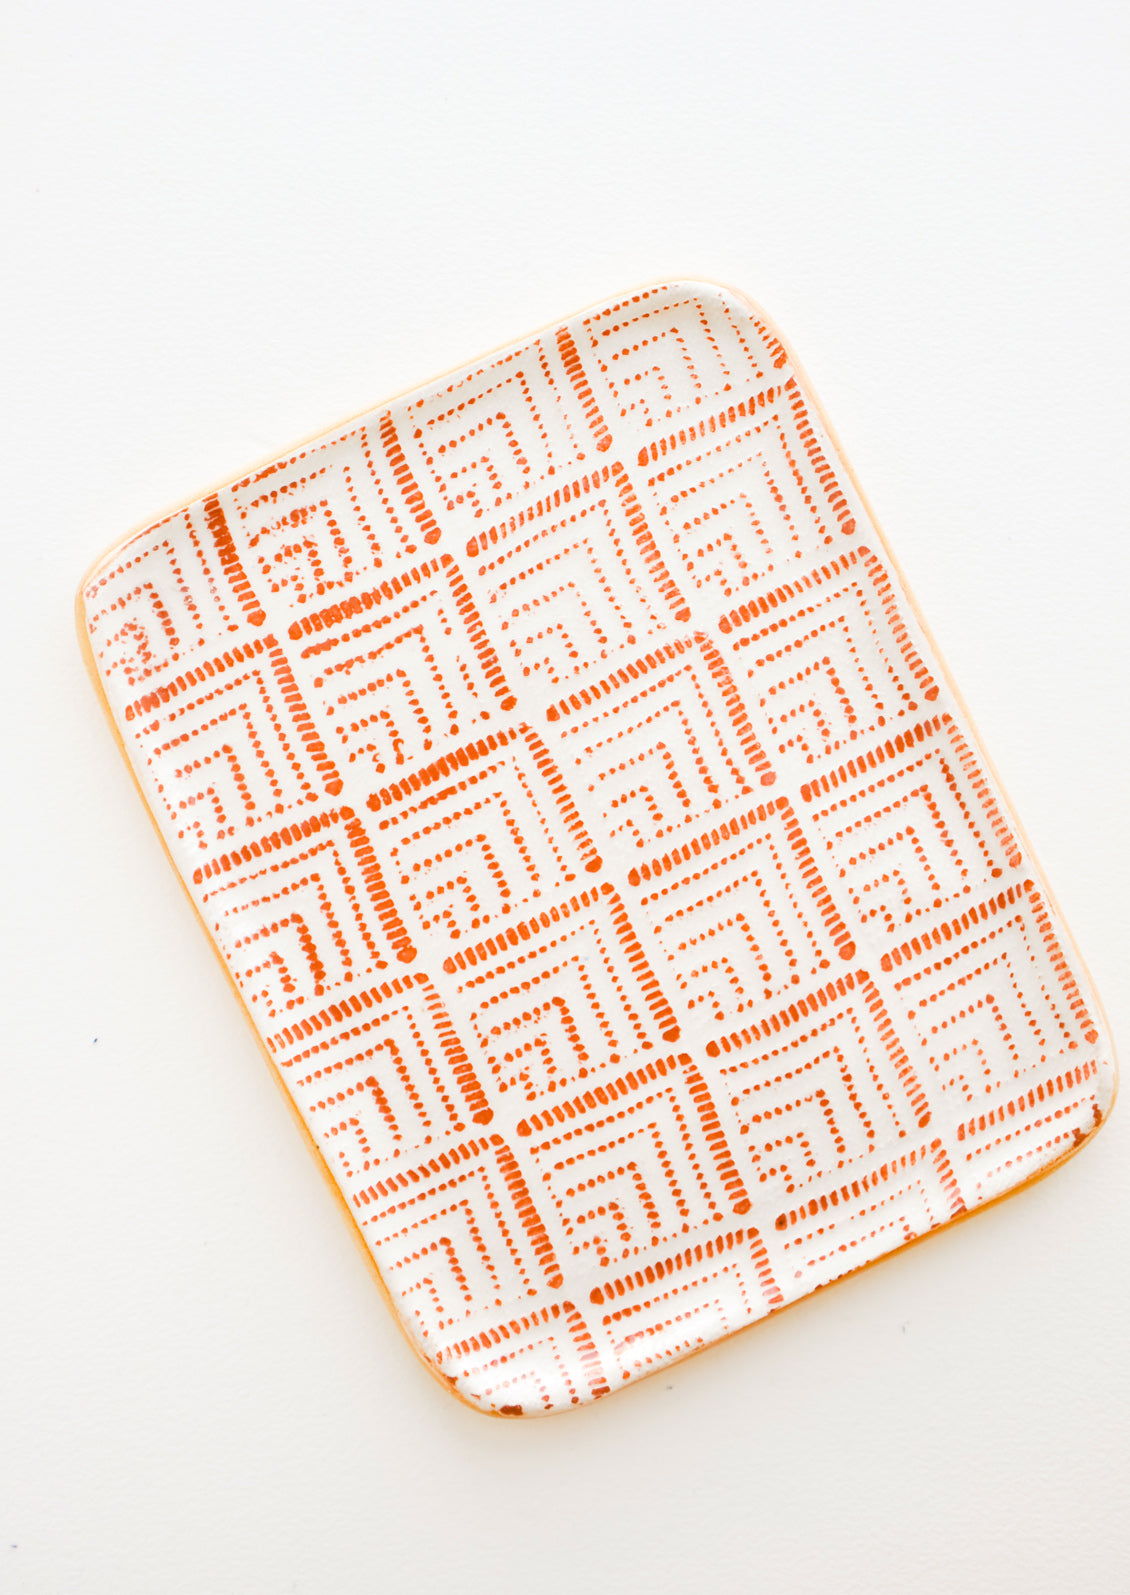 Pressed Pattern Ceramic Tea Tray in Deco / Rust - LEIF